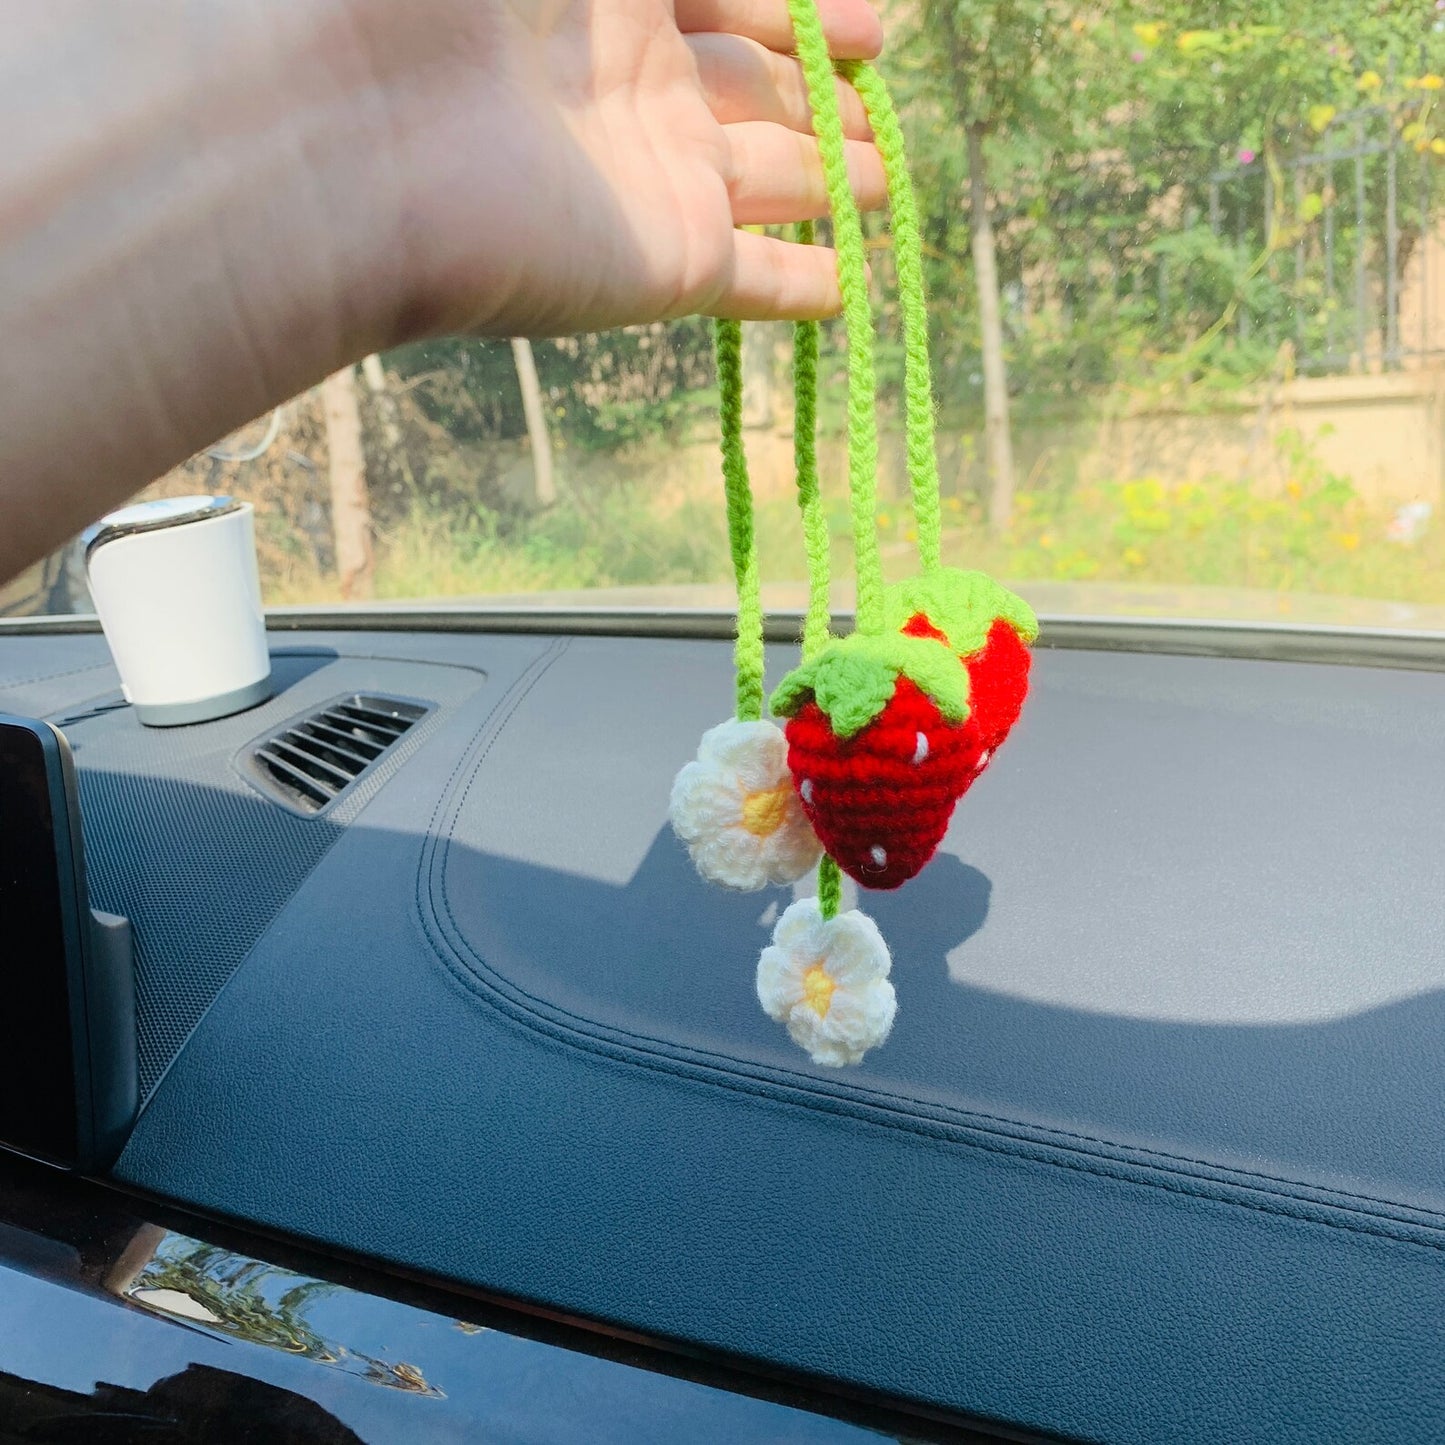 Crochet Strawberry Decor Car Decor